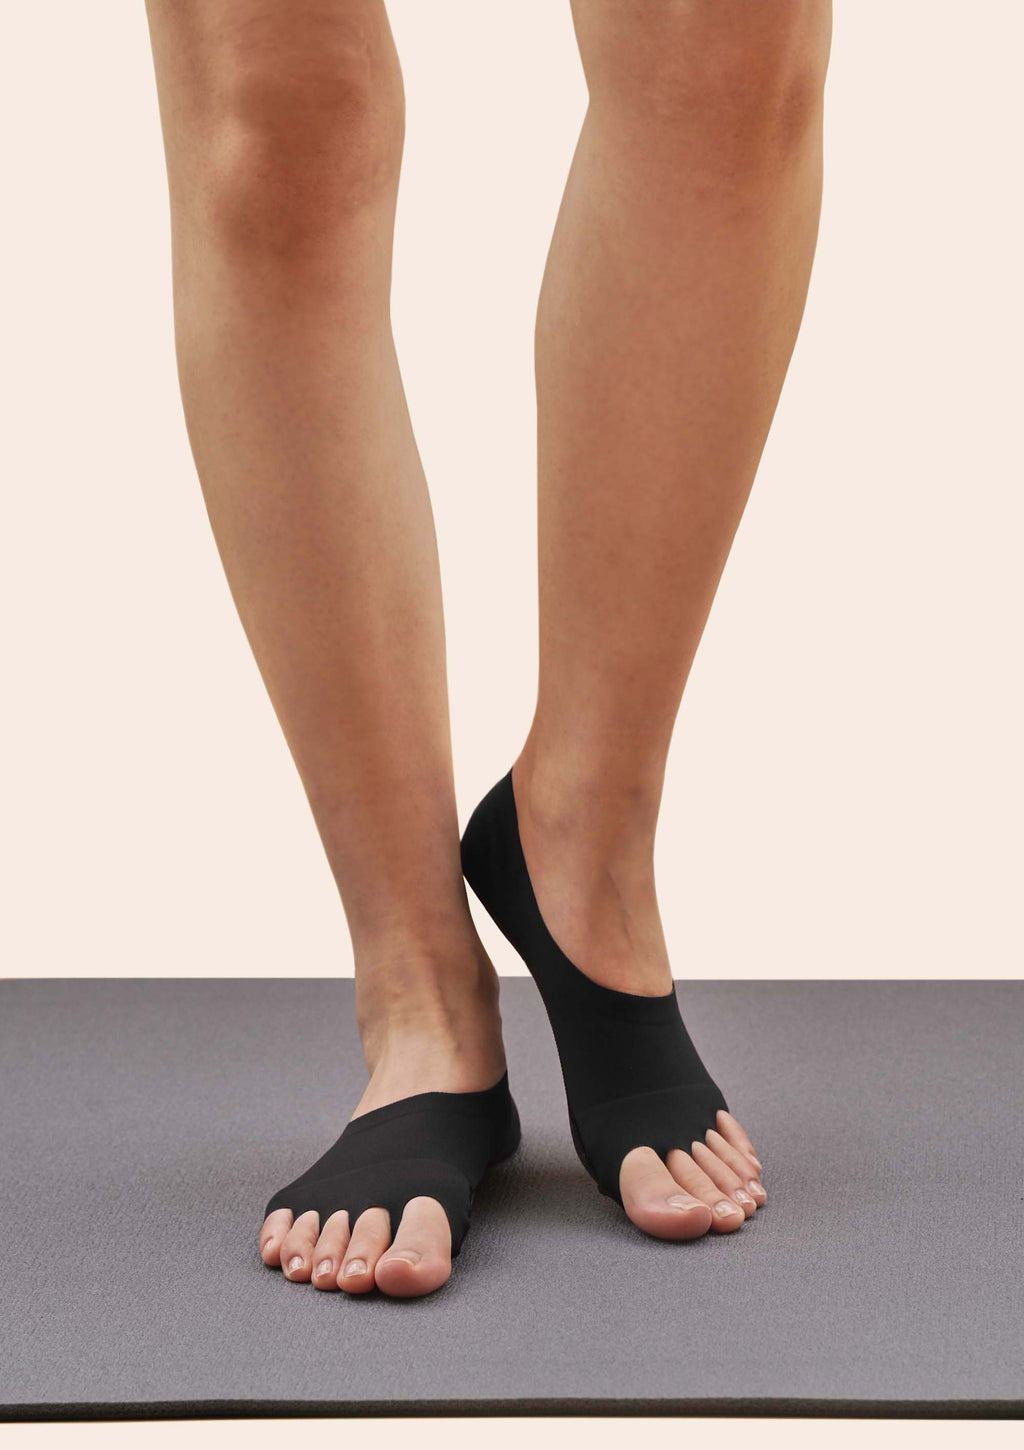 Knitido+ Toe Socks for Yoga, Pilates and more. 